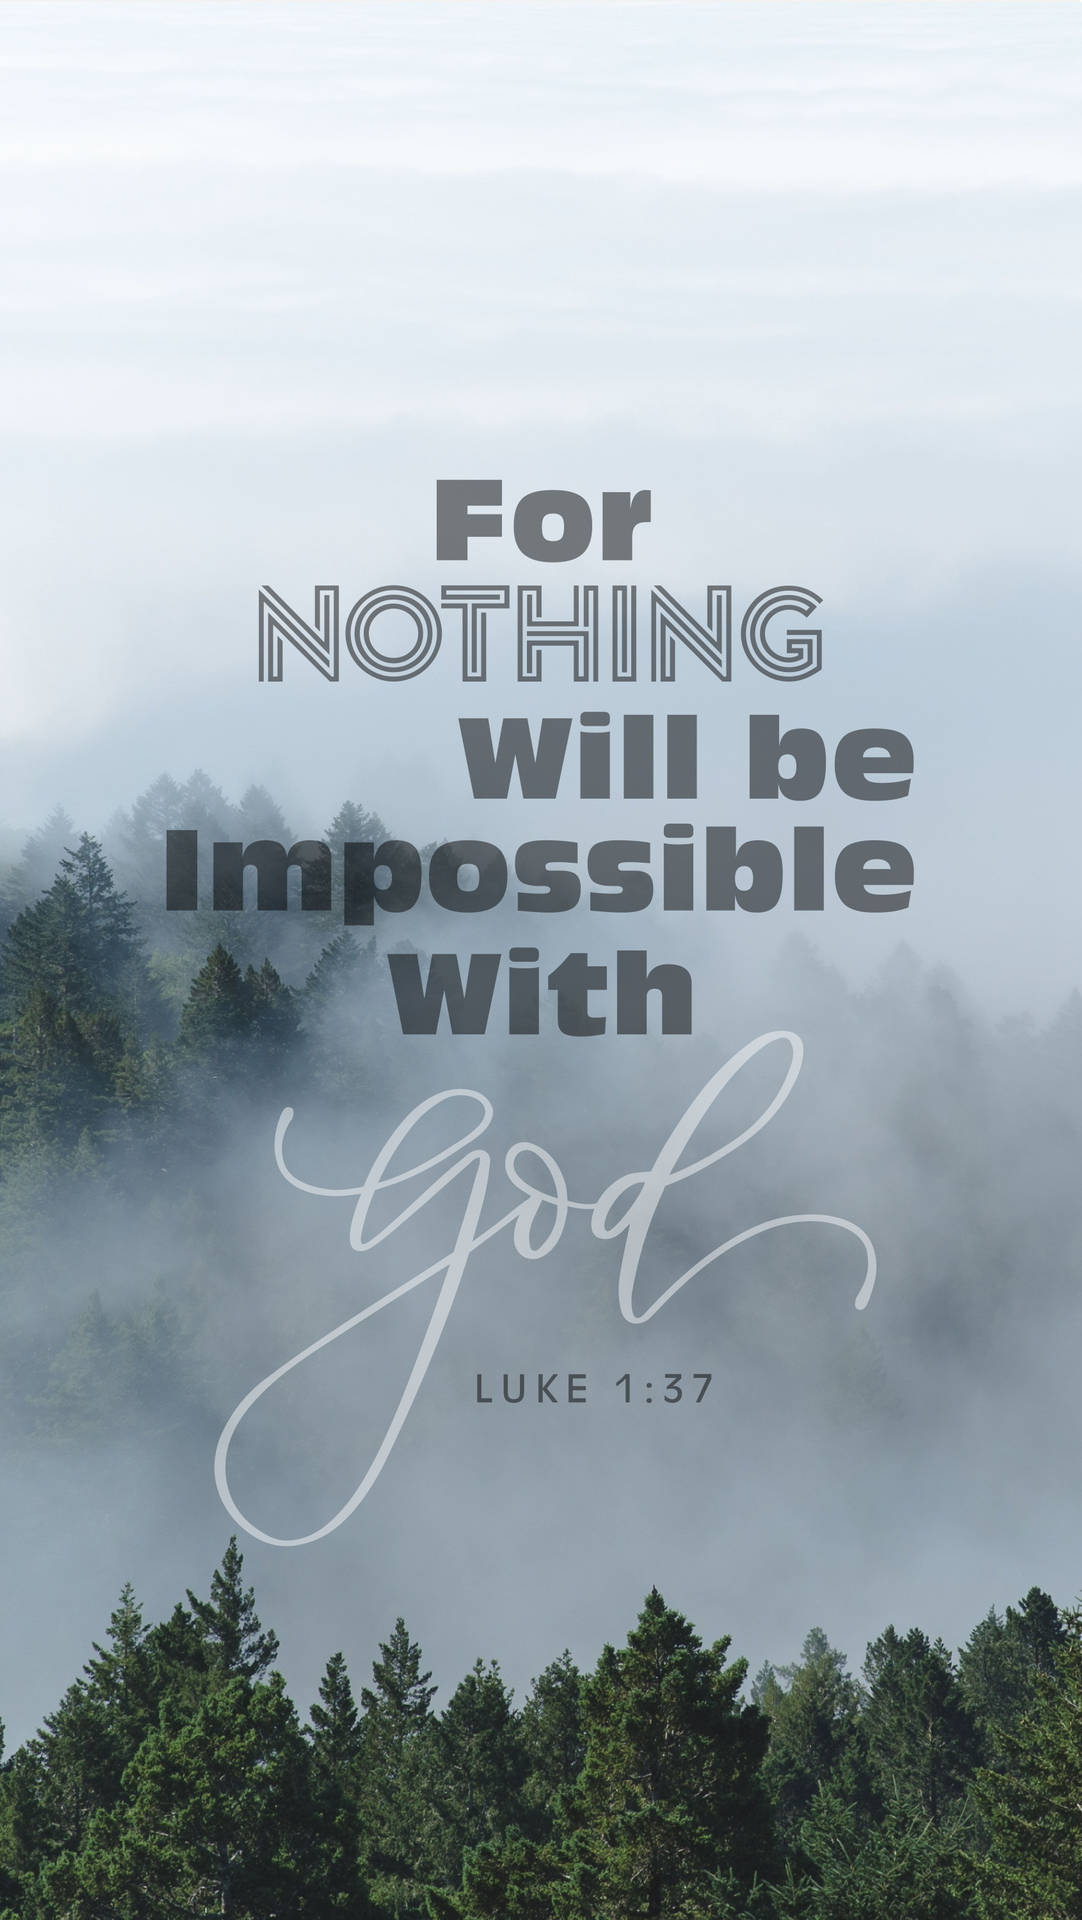 Luke 1:37 Bible Quote